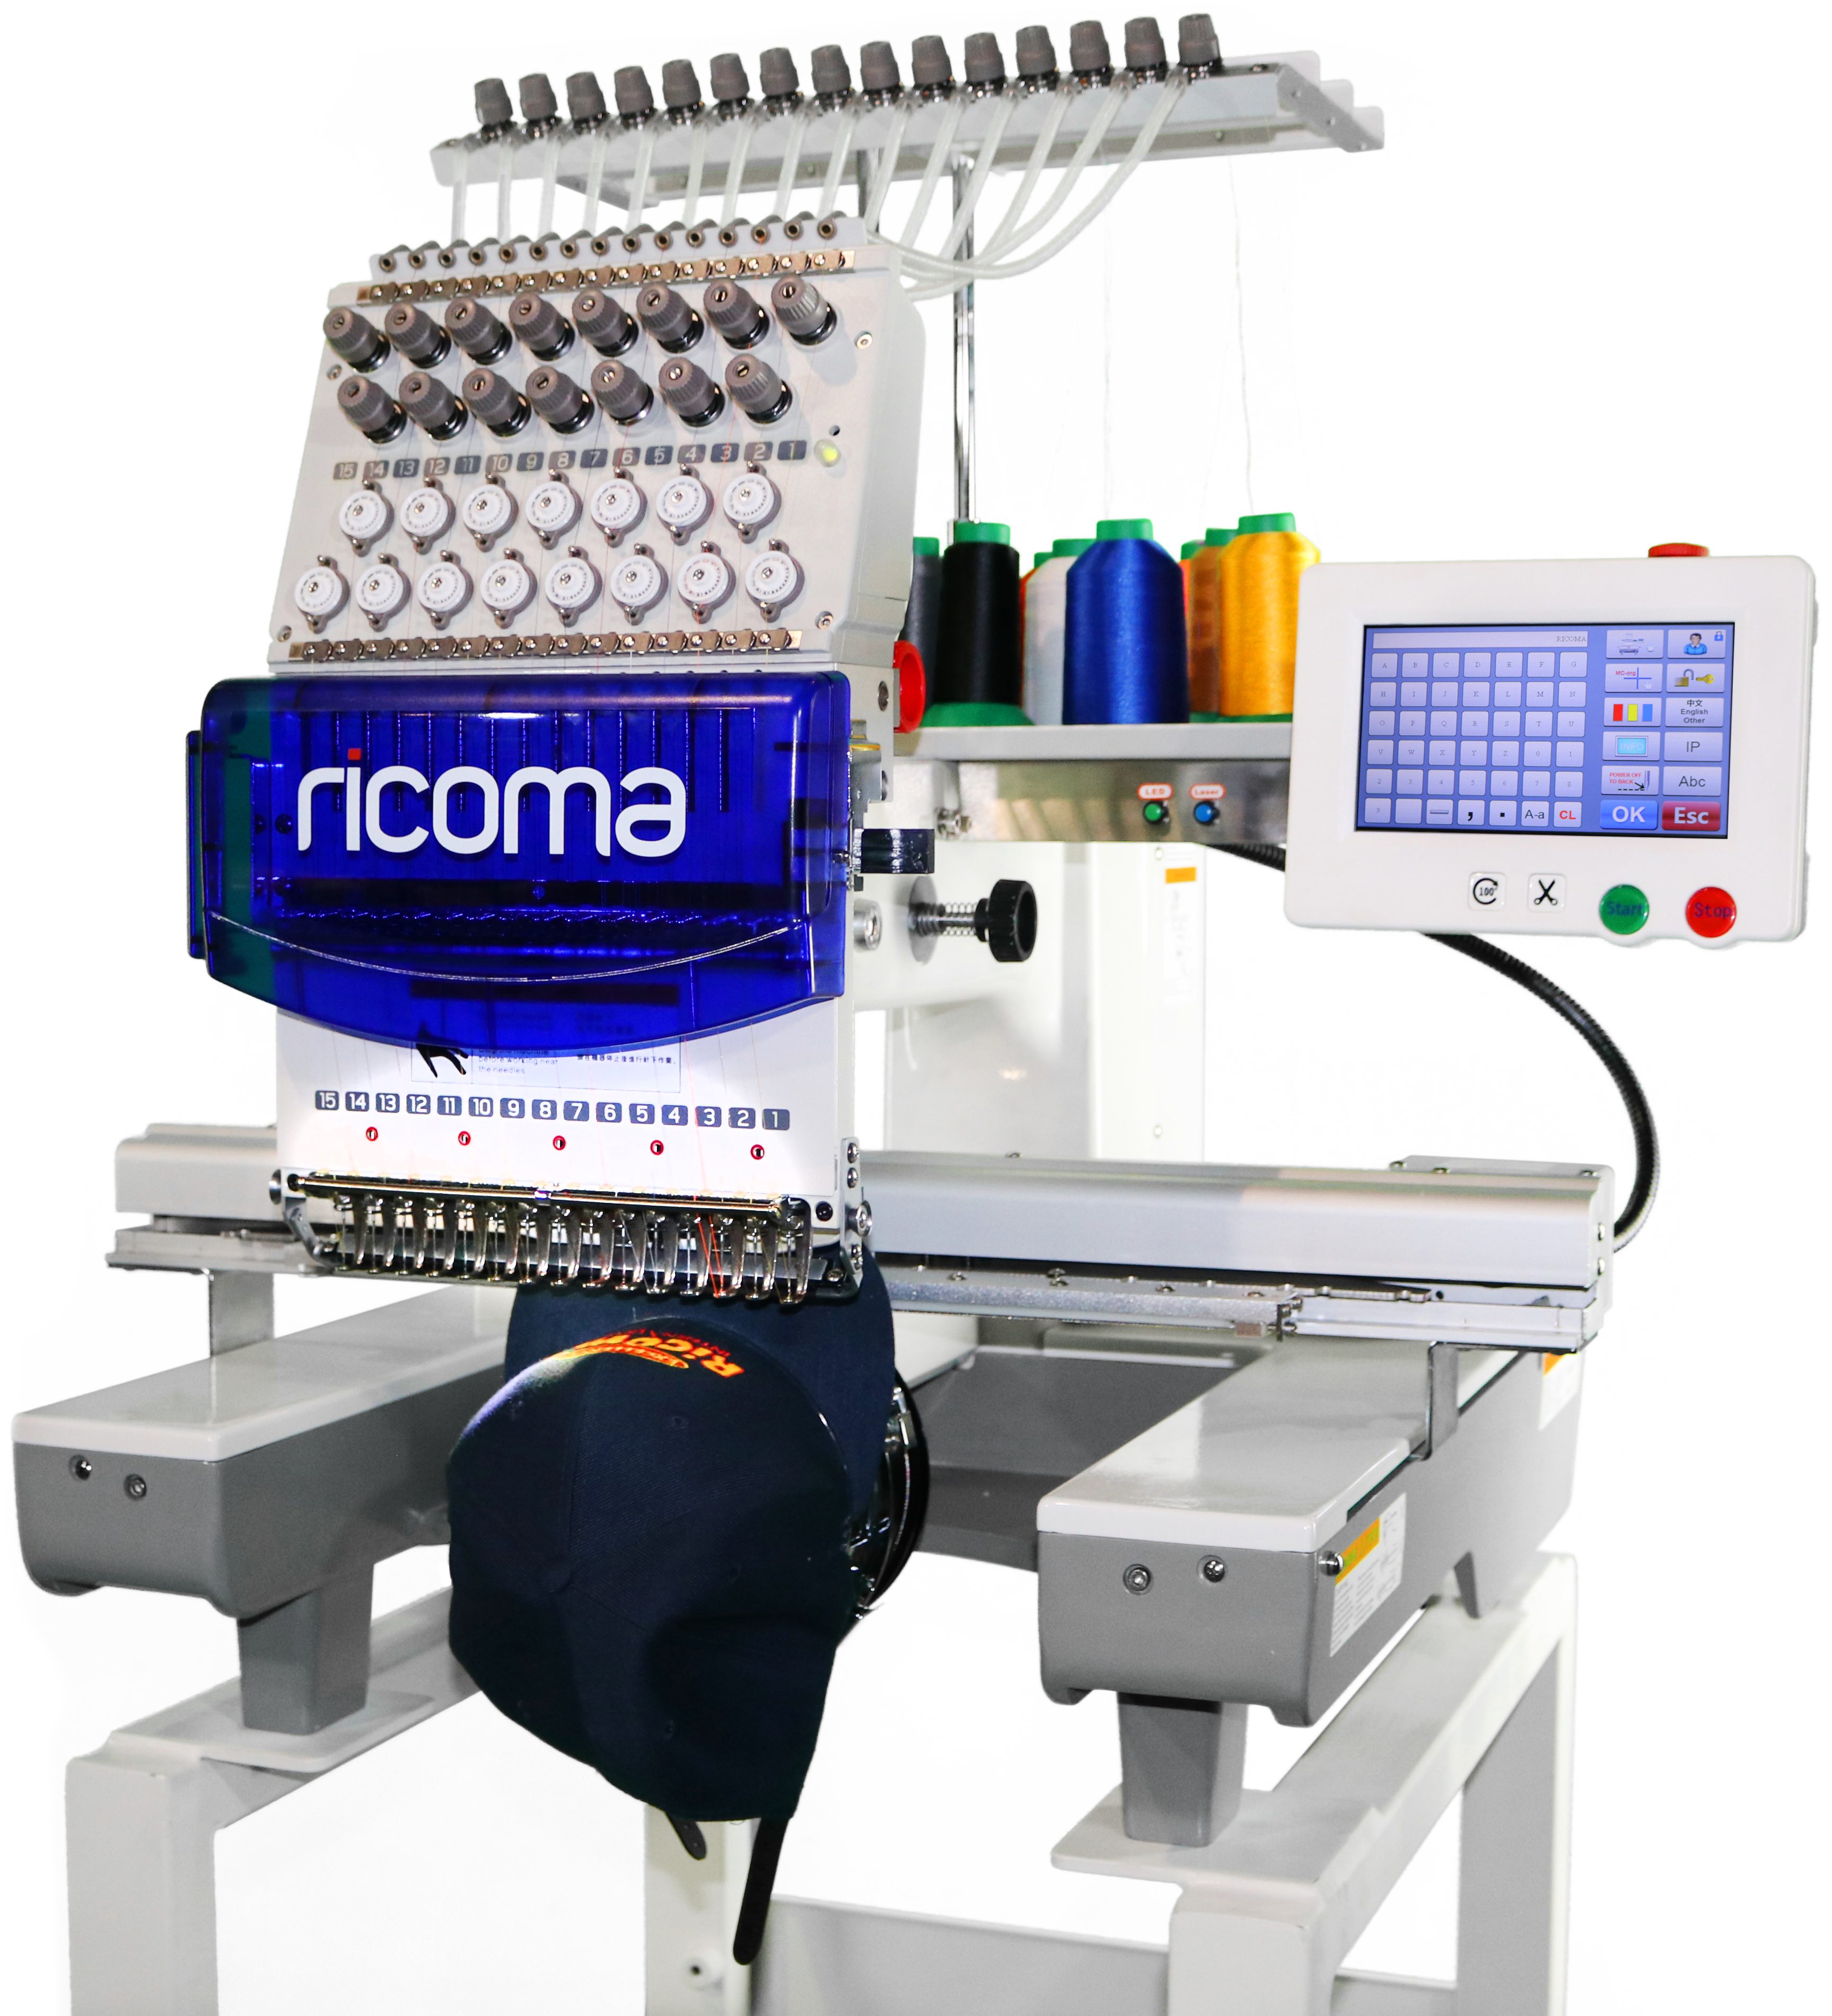 Ricoma Embroidery Machines Miami Fl 33178 | Embroidery Shops